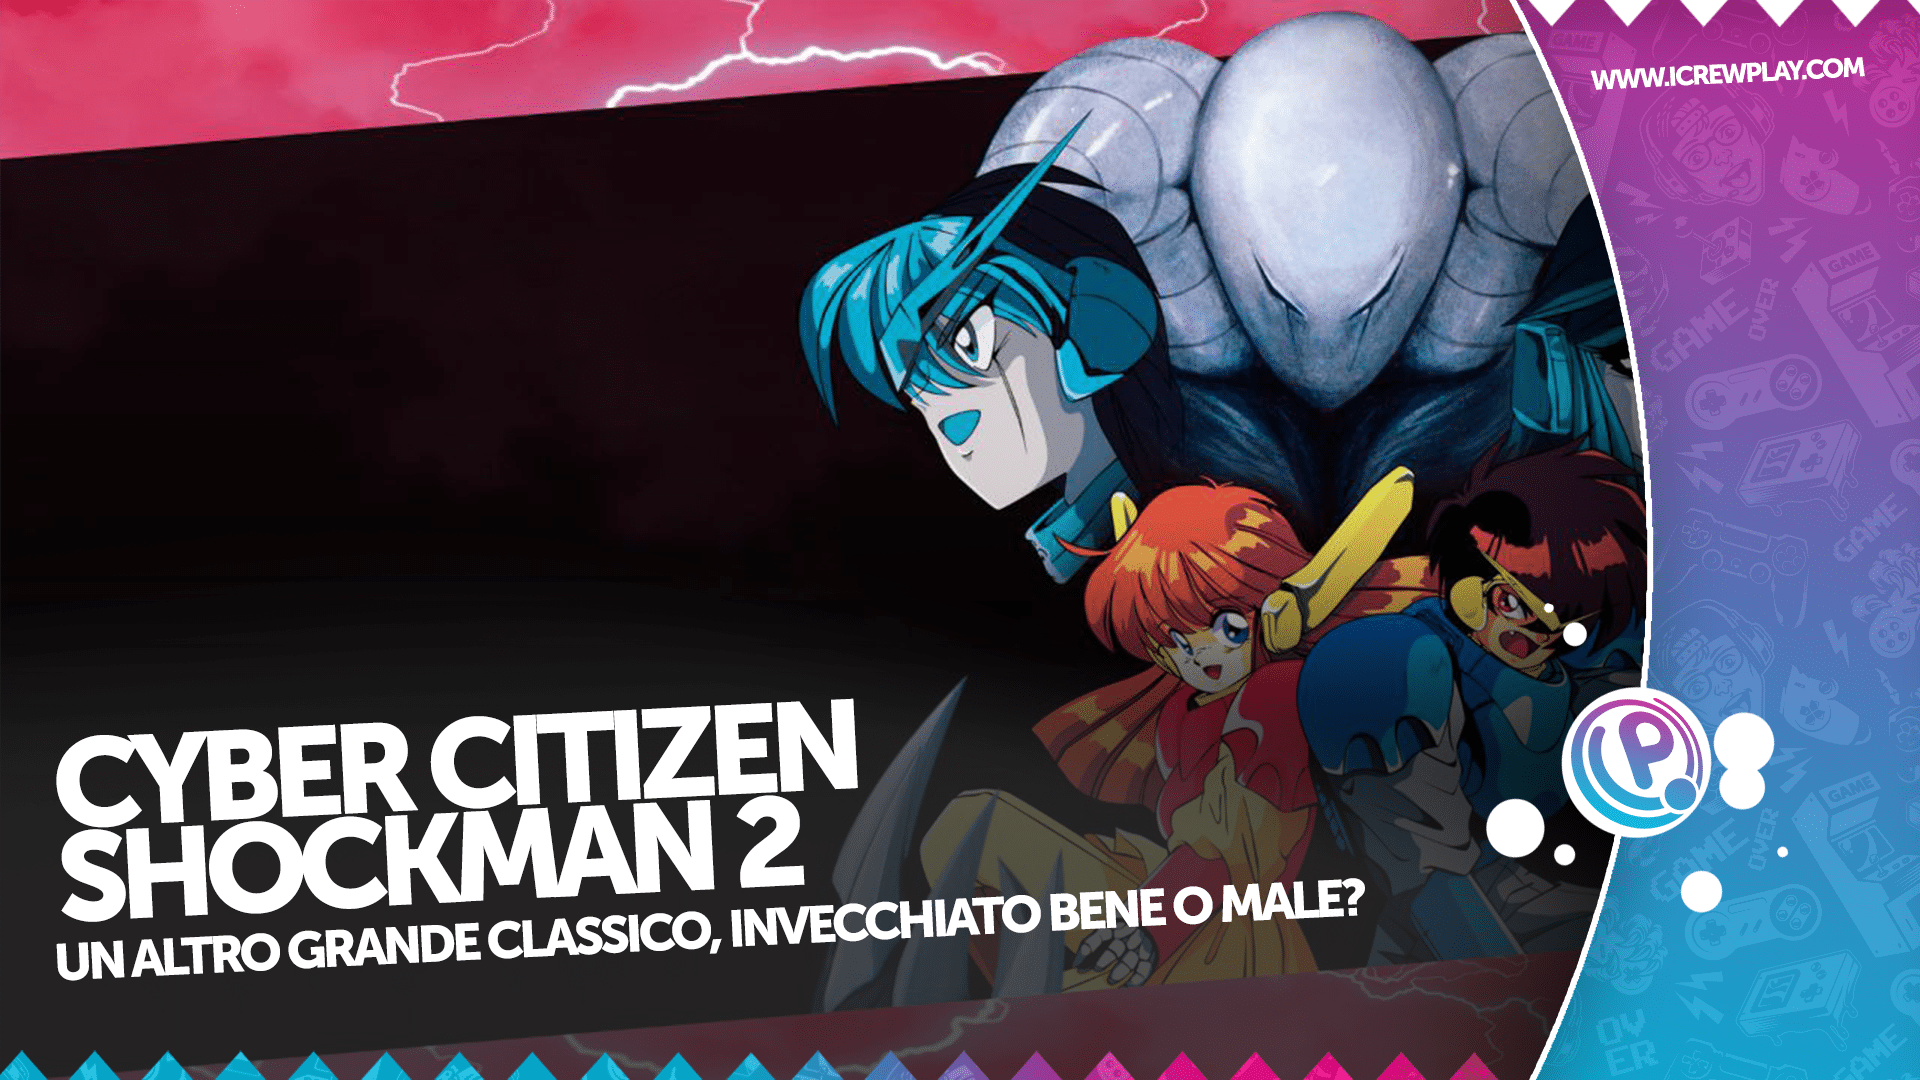 Cyber citizen shockman 2